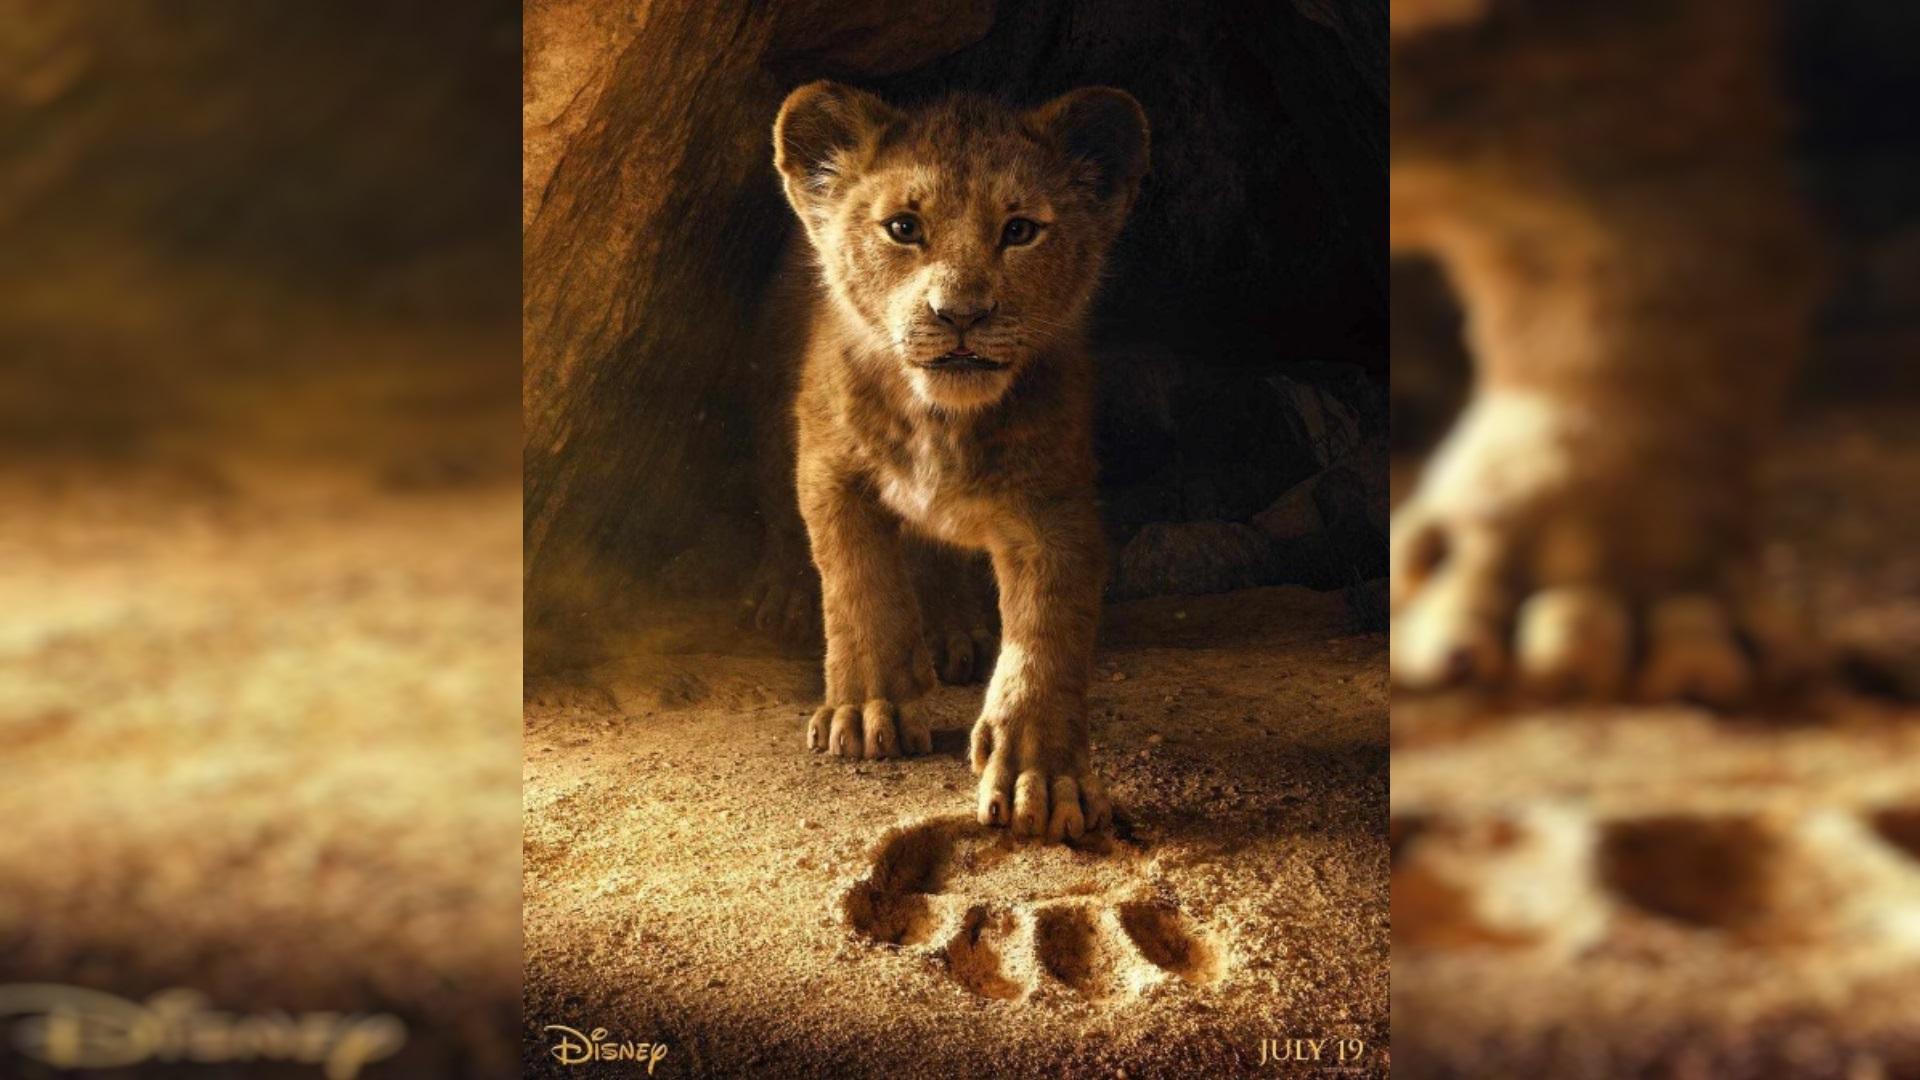 The Lion King Wallpaper 2019